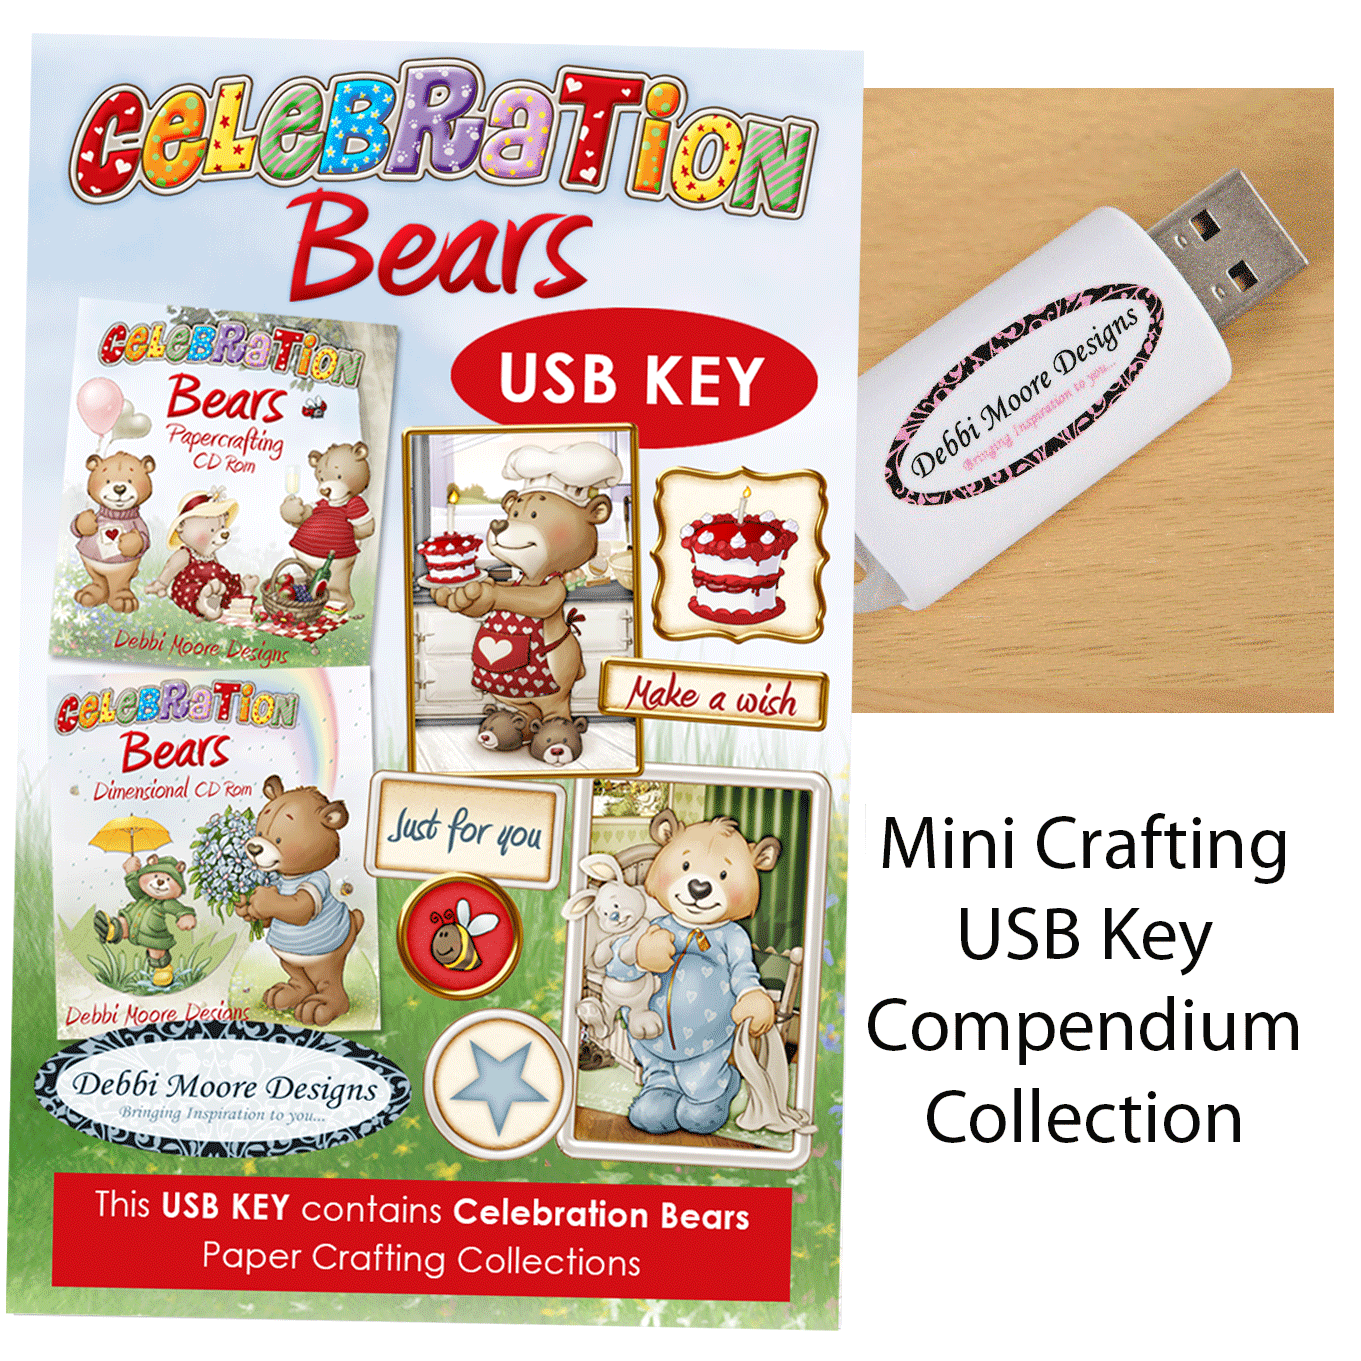 Celebration Bears Crafting Compendium USB Key Collection